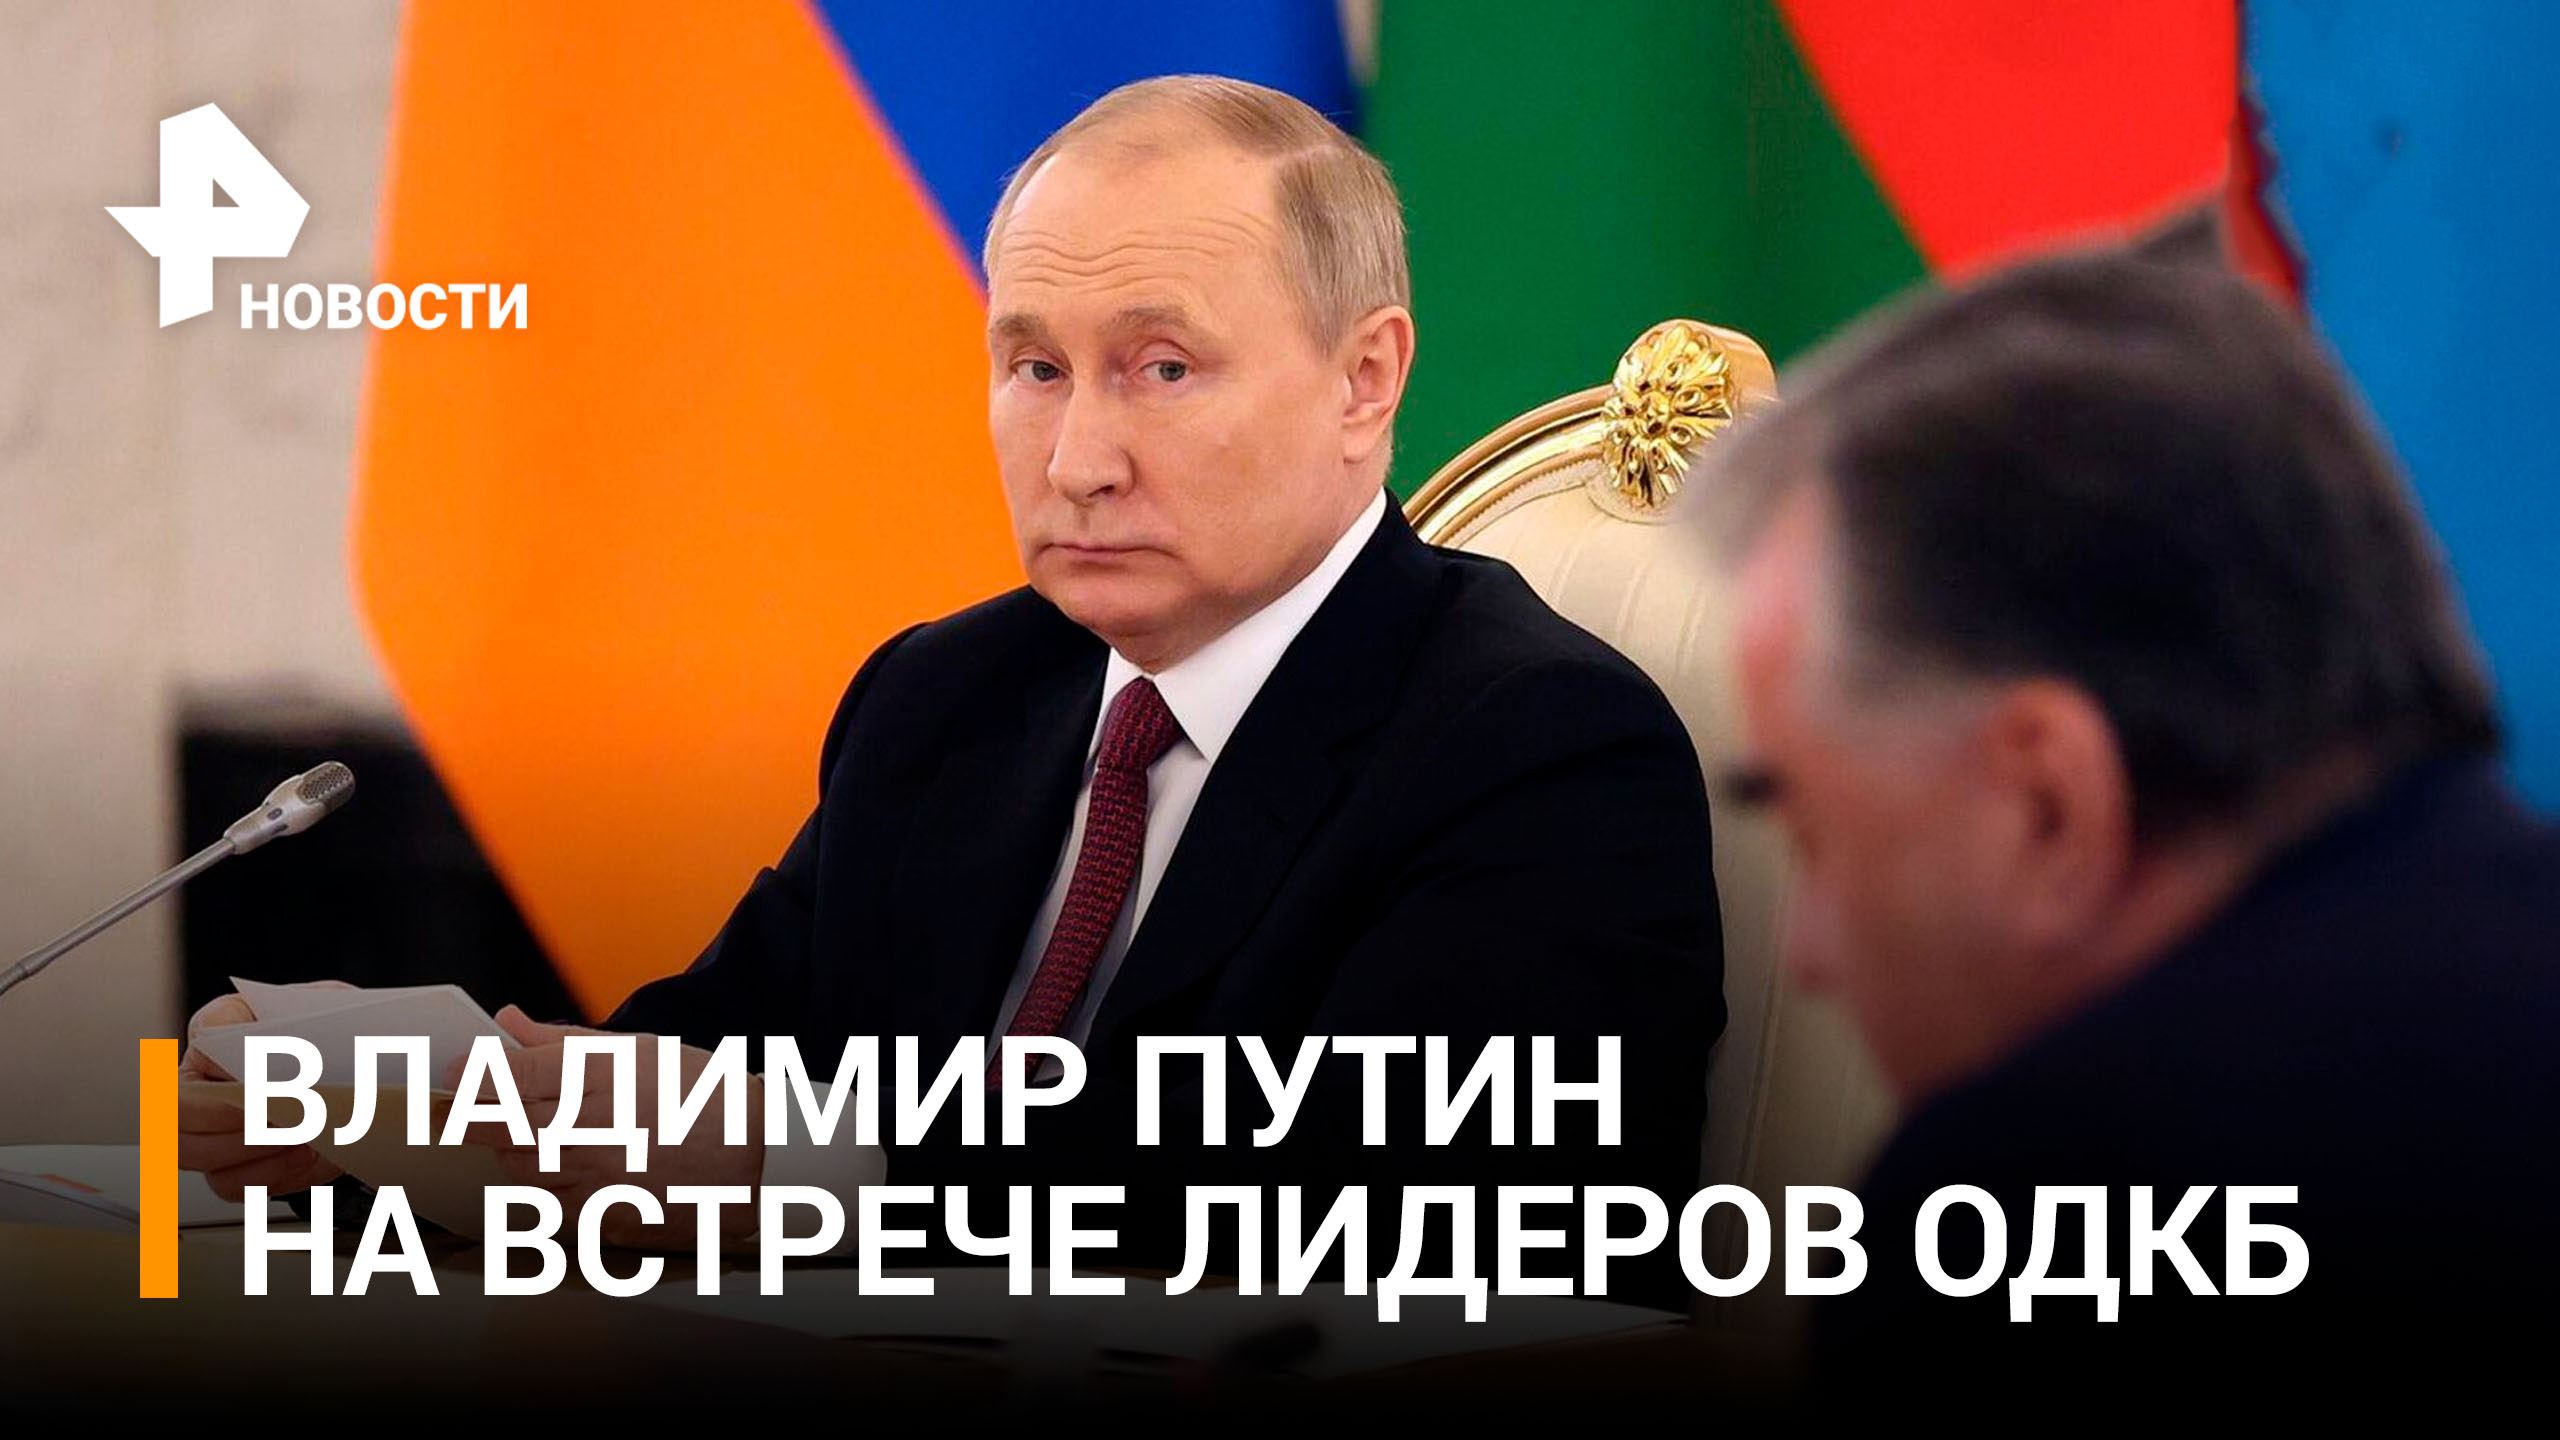 Владимир Путин на встрече глав стран ОДКБ / РЕН Новости